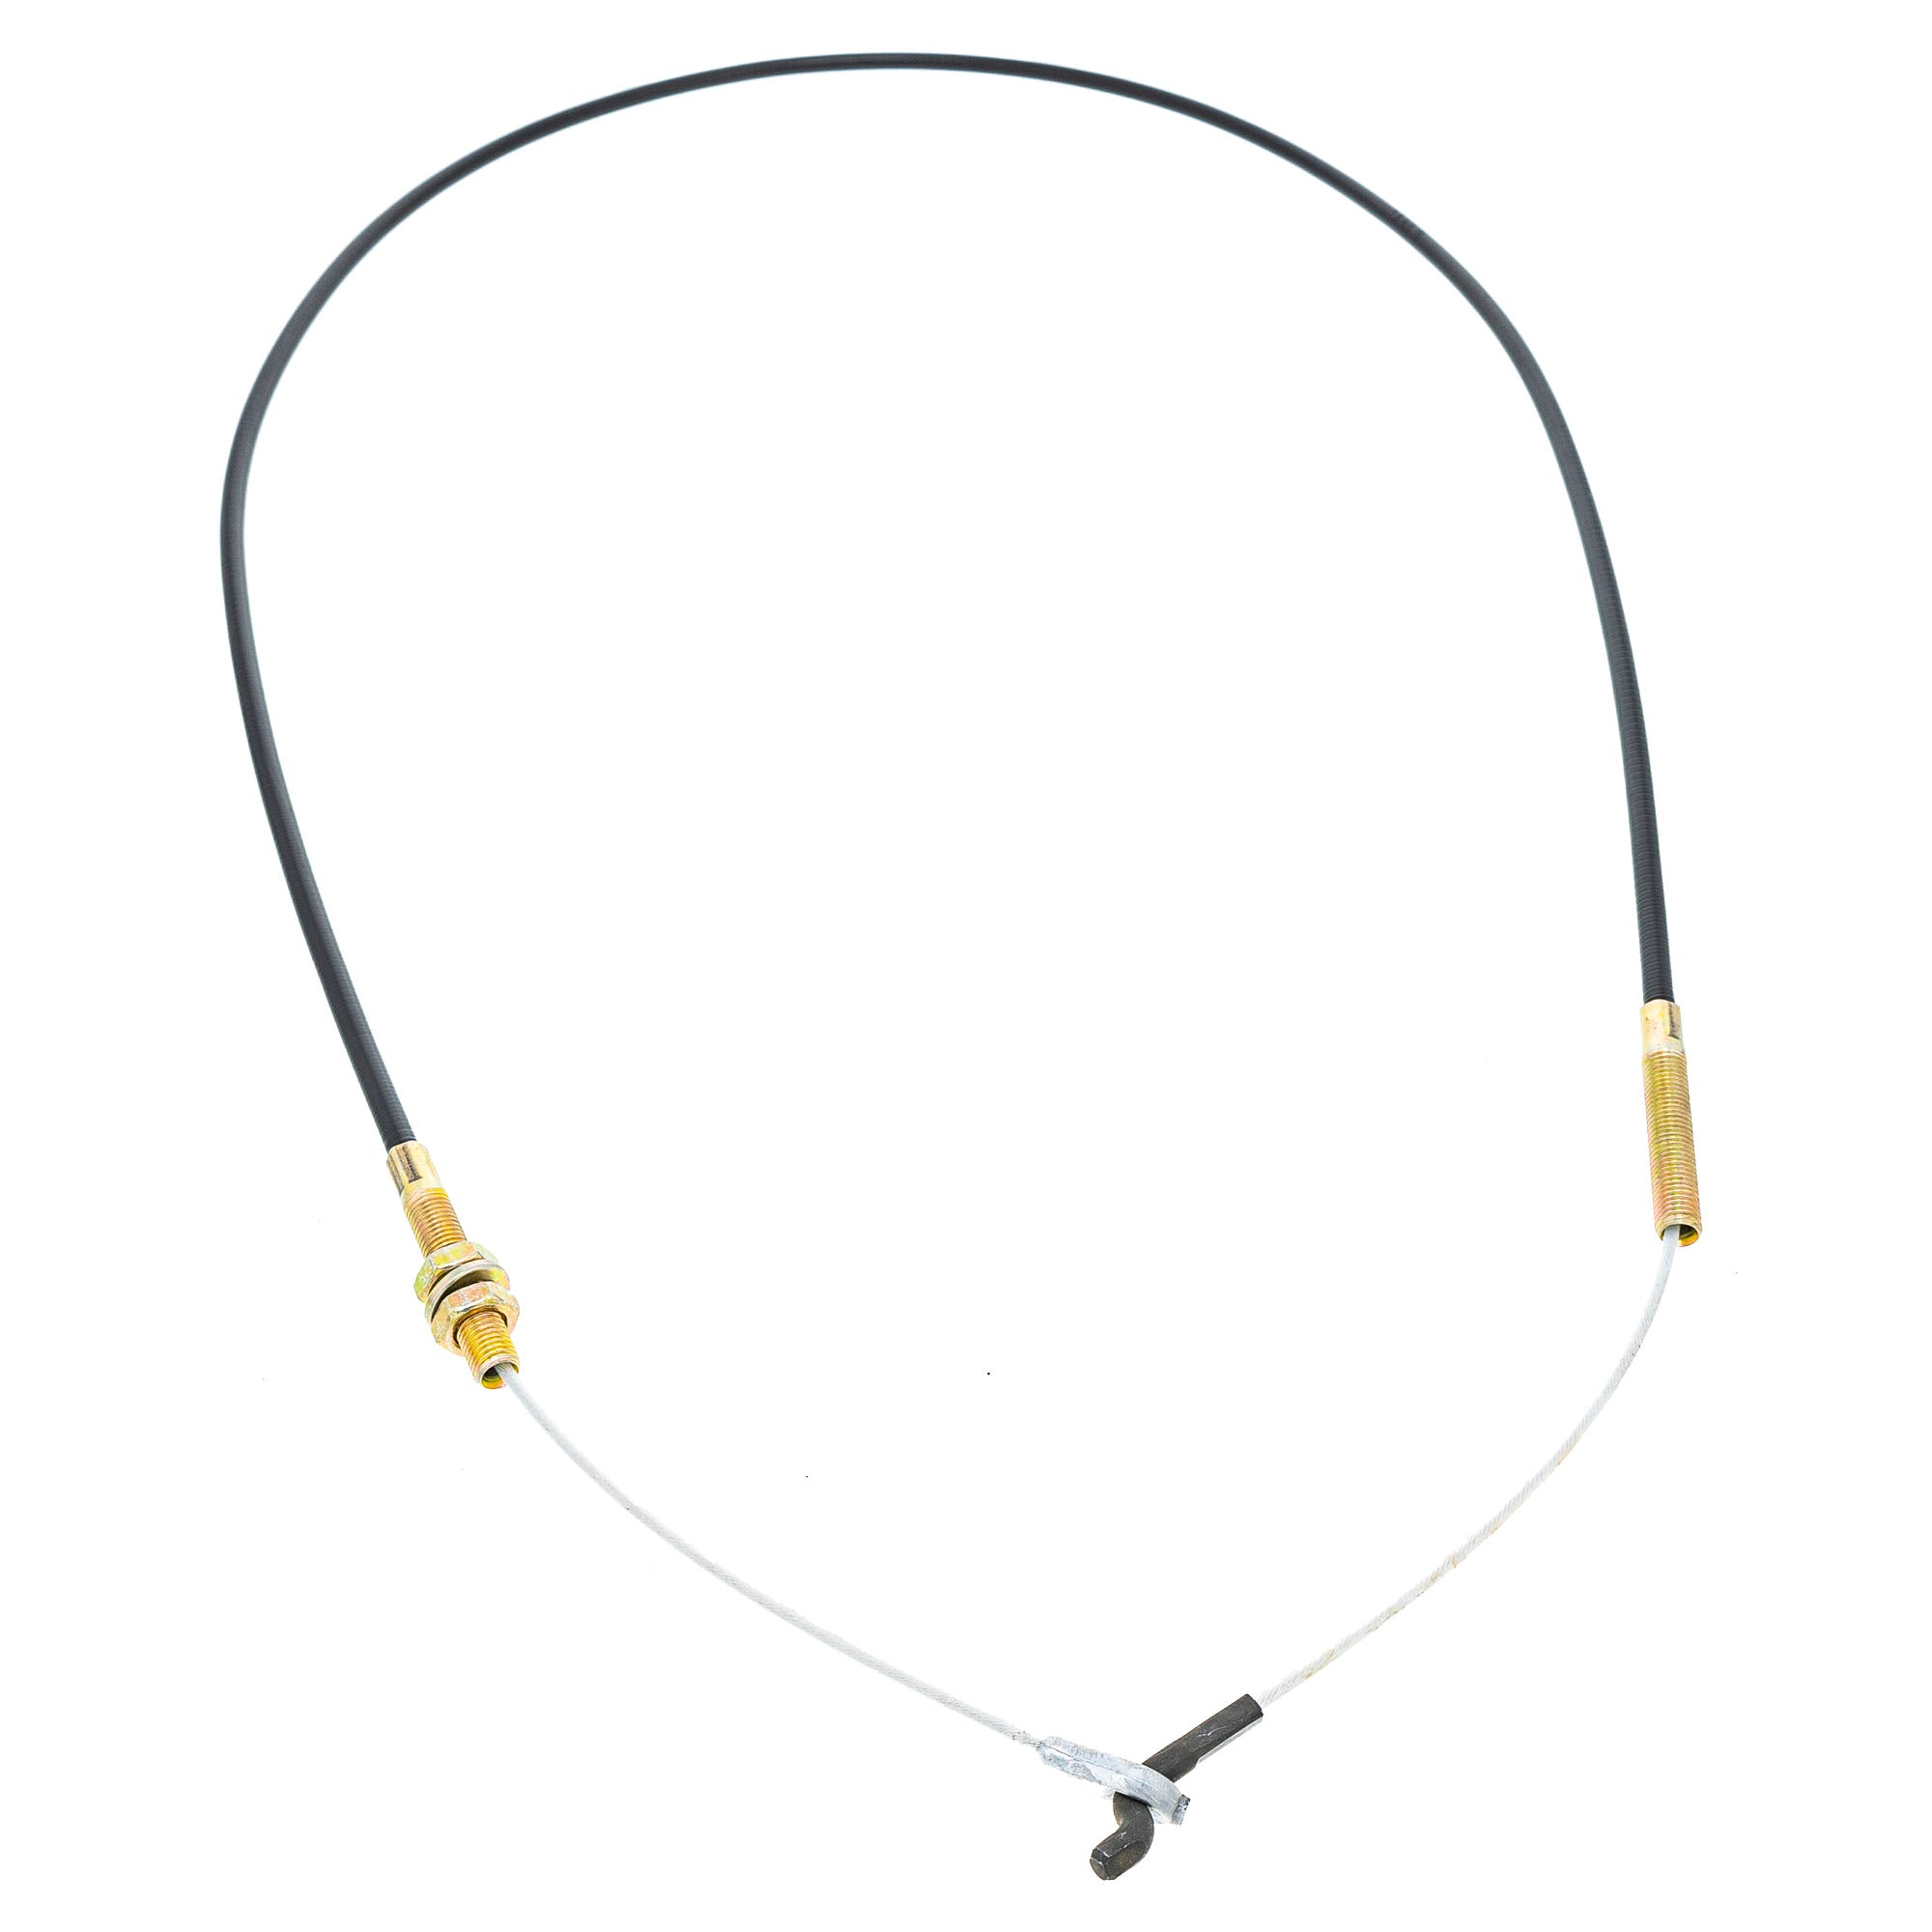 946-0484  Clutch Control Cable 41" Tine Tiller Rear H.P. 405